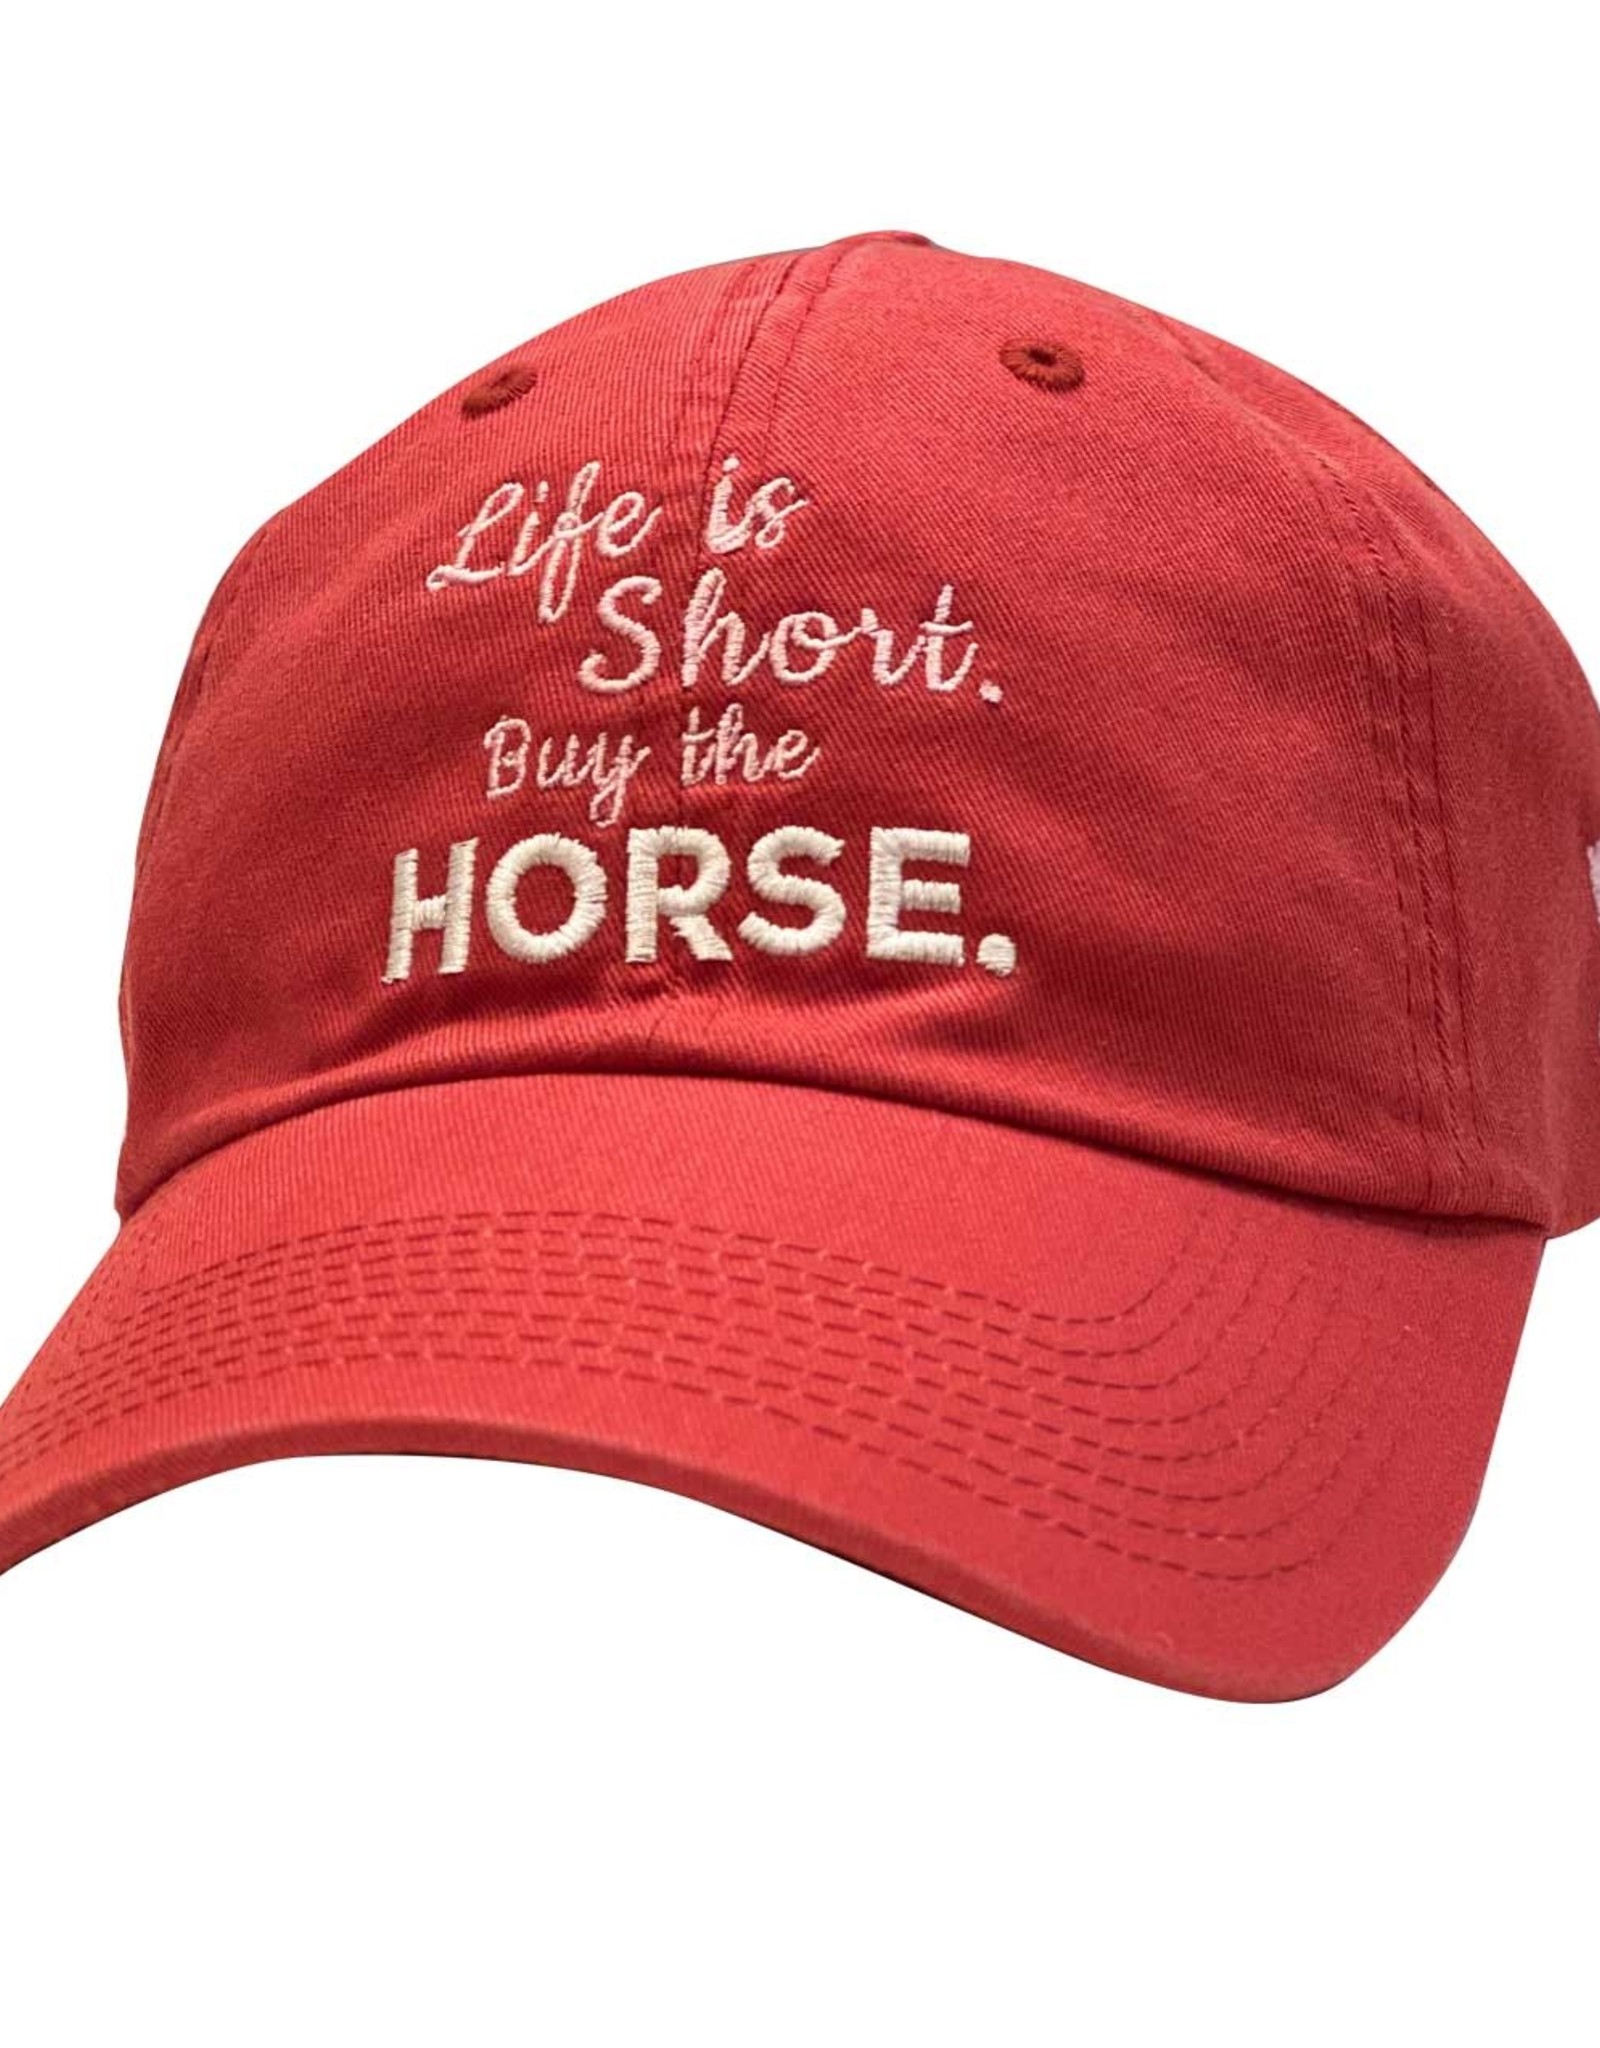 Stirrups Baseball cap -  horse saying